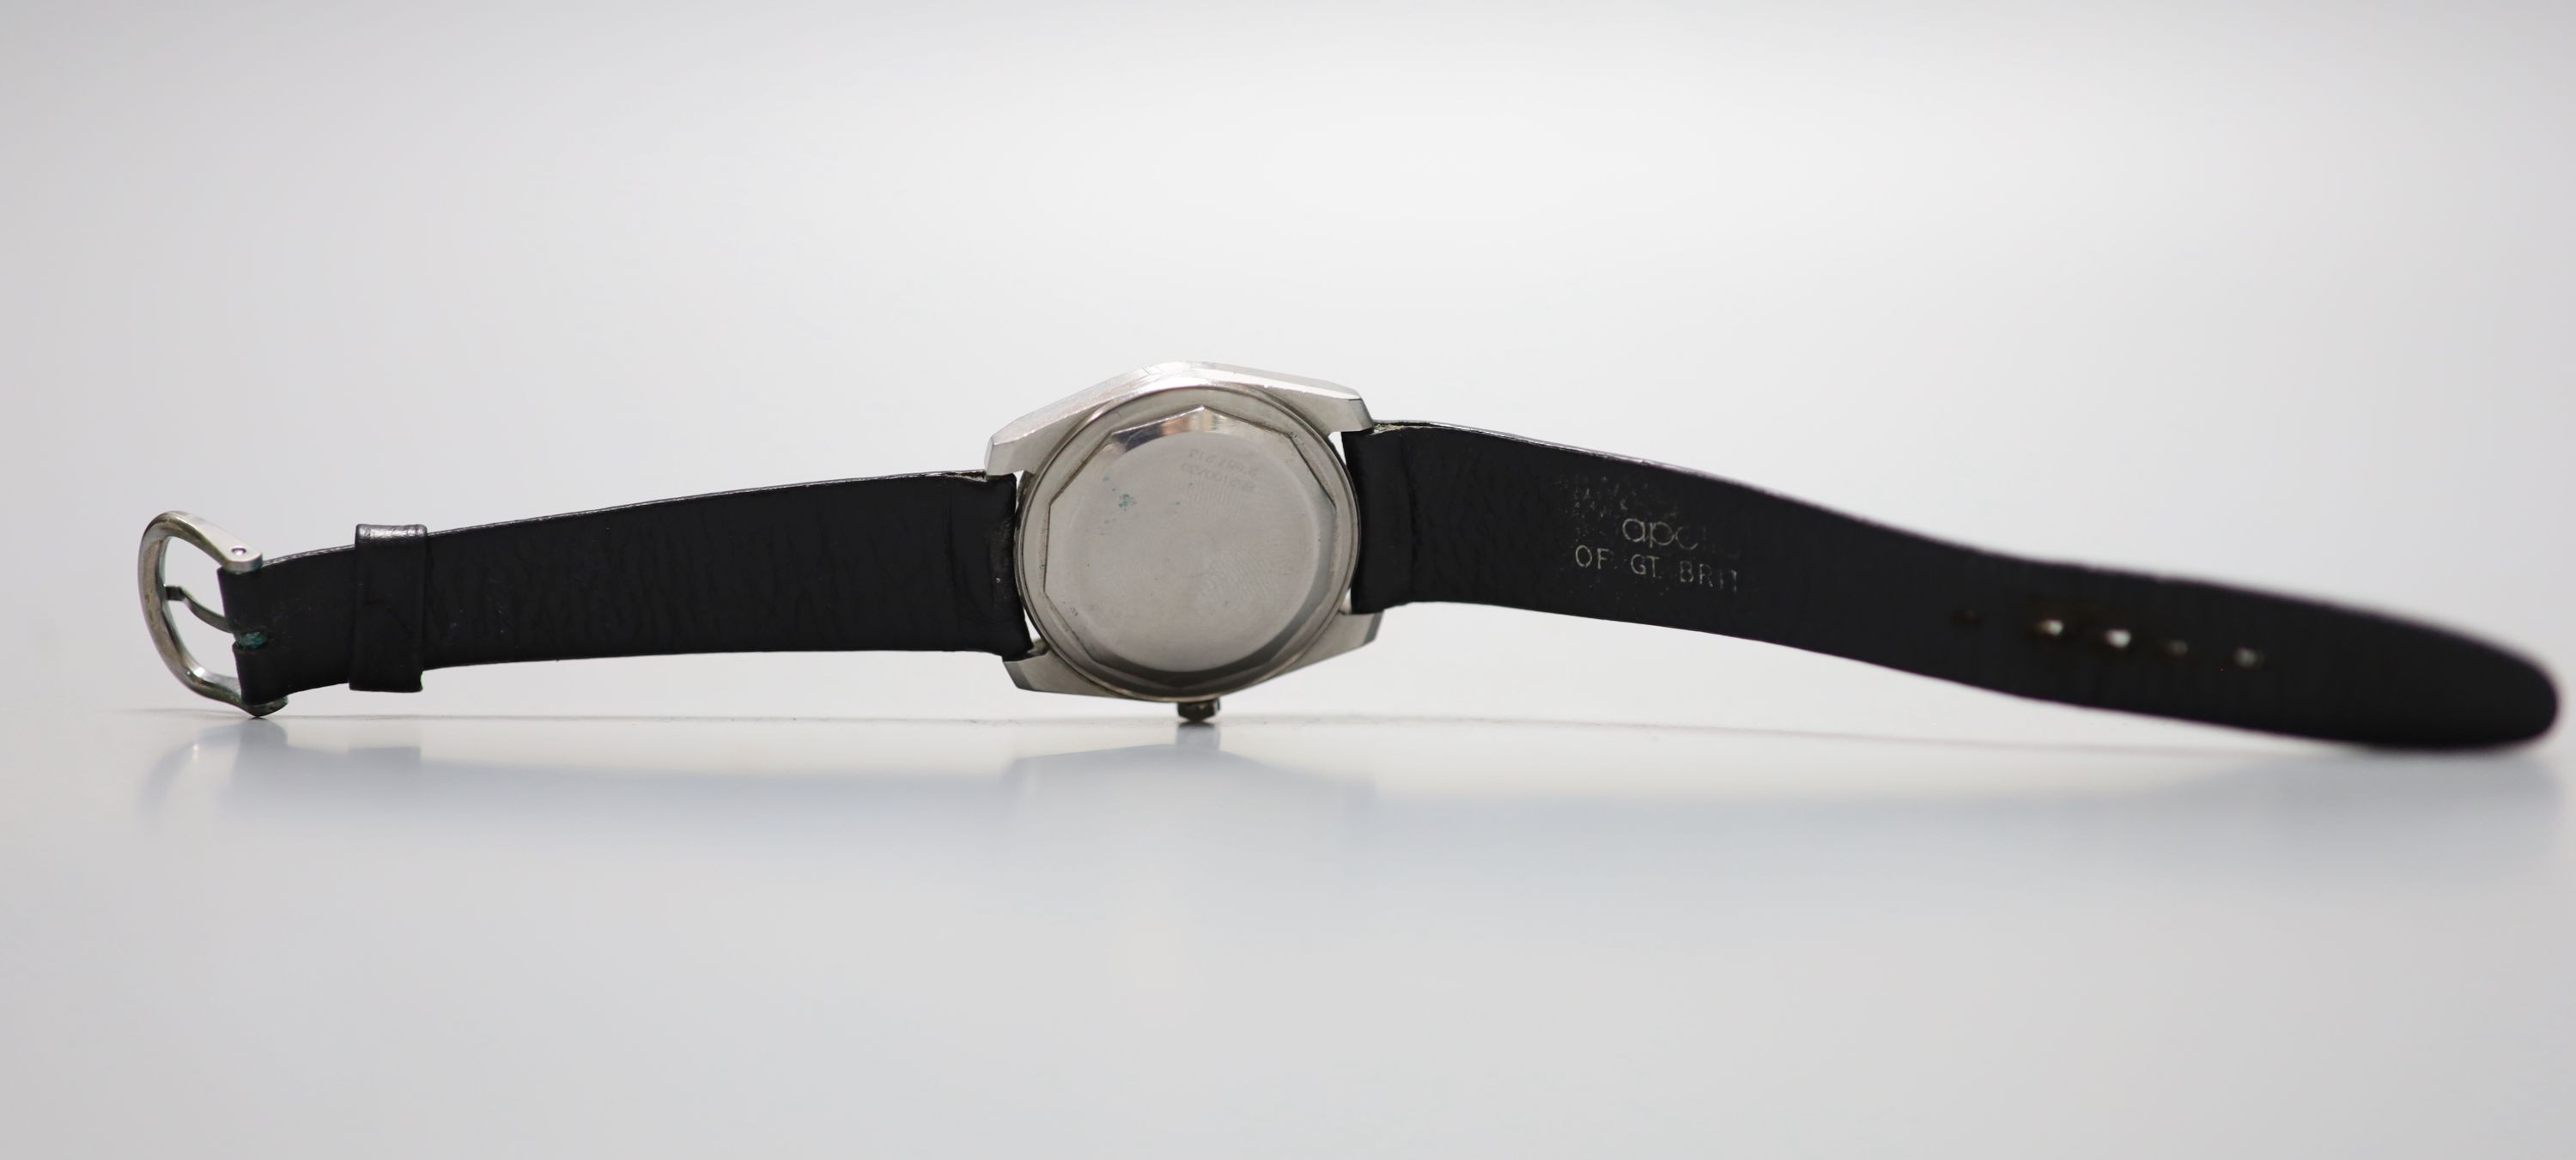 A gentleman's stainless steel Universal Unisonic quartz wrist watch, on a leather strap, case diameter 34mm.